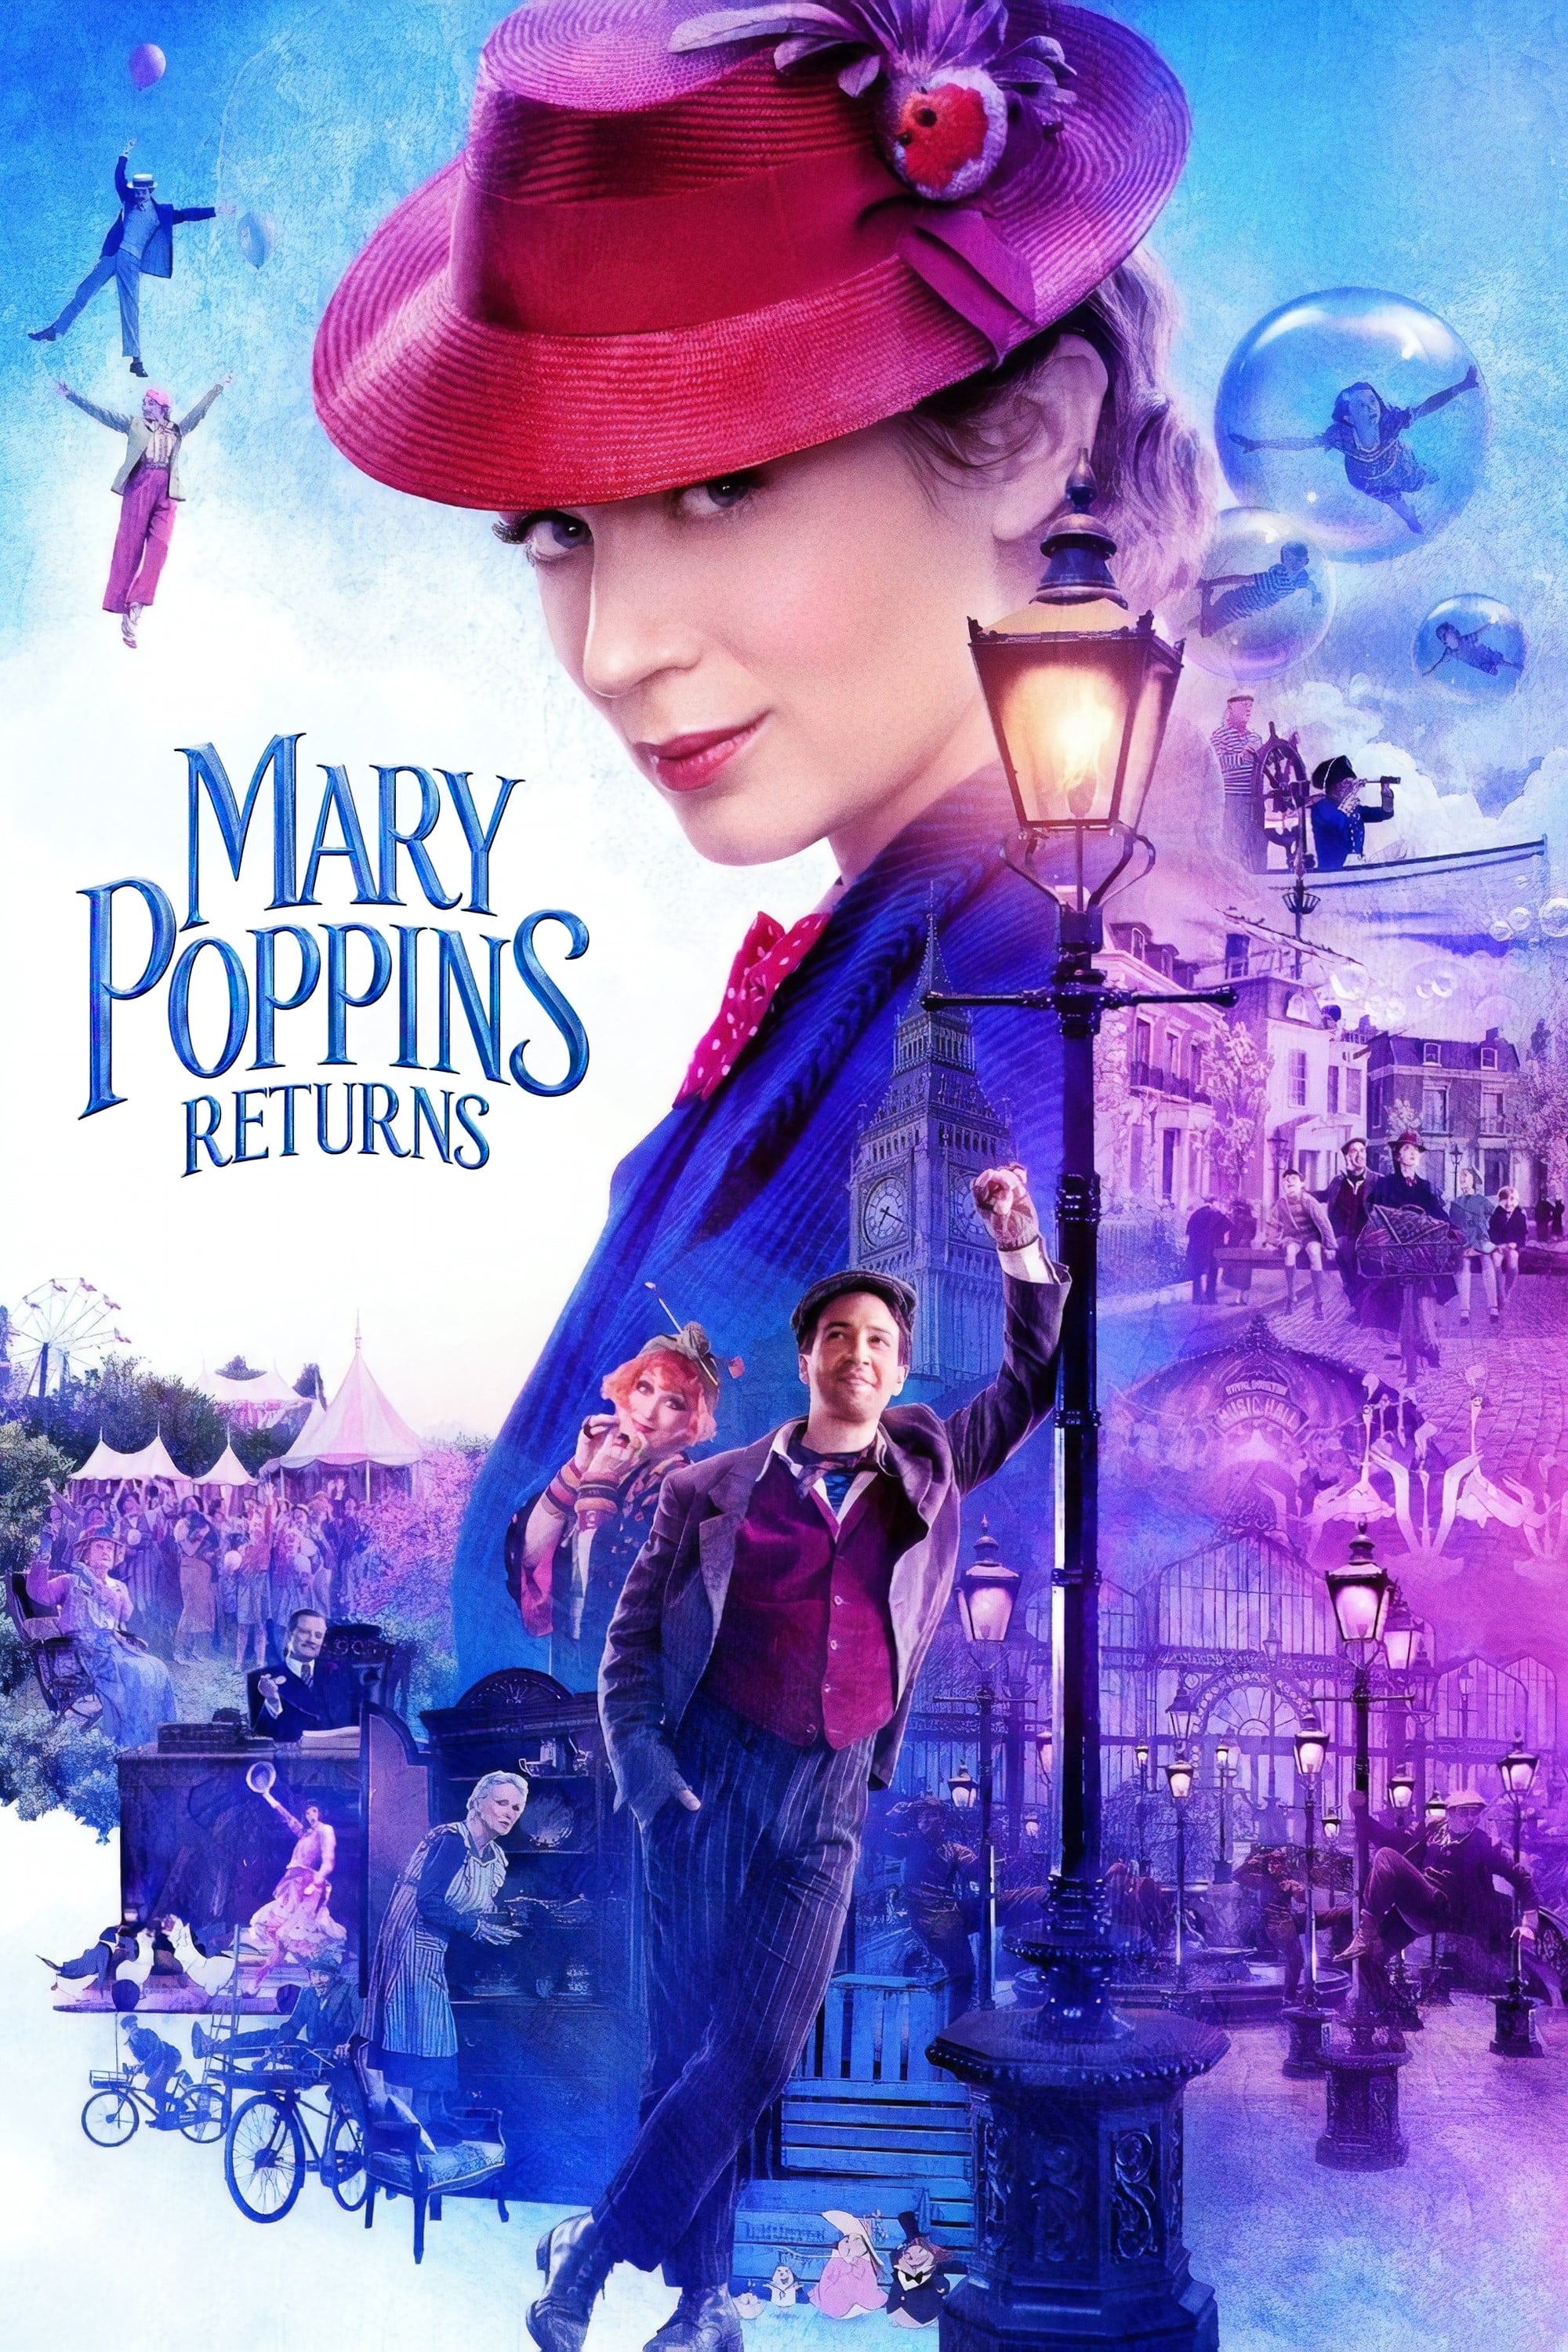 [MINI Super-HQ] Mary Poppins Returns (2018) แมรี่ ป๊อบปิ้นส์ กลับมาแล้ว [1080p] [พากย์ไทย 2.0 + เสียงอังกฤษ DTS] [บรรยายไทย + อังกฤษ] [เสียงไทยมาสเตอร์ + ซับไทย] [USERLOAD]